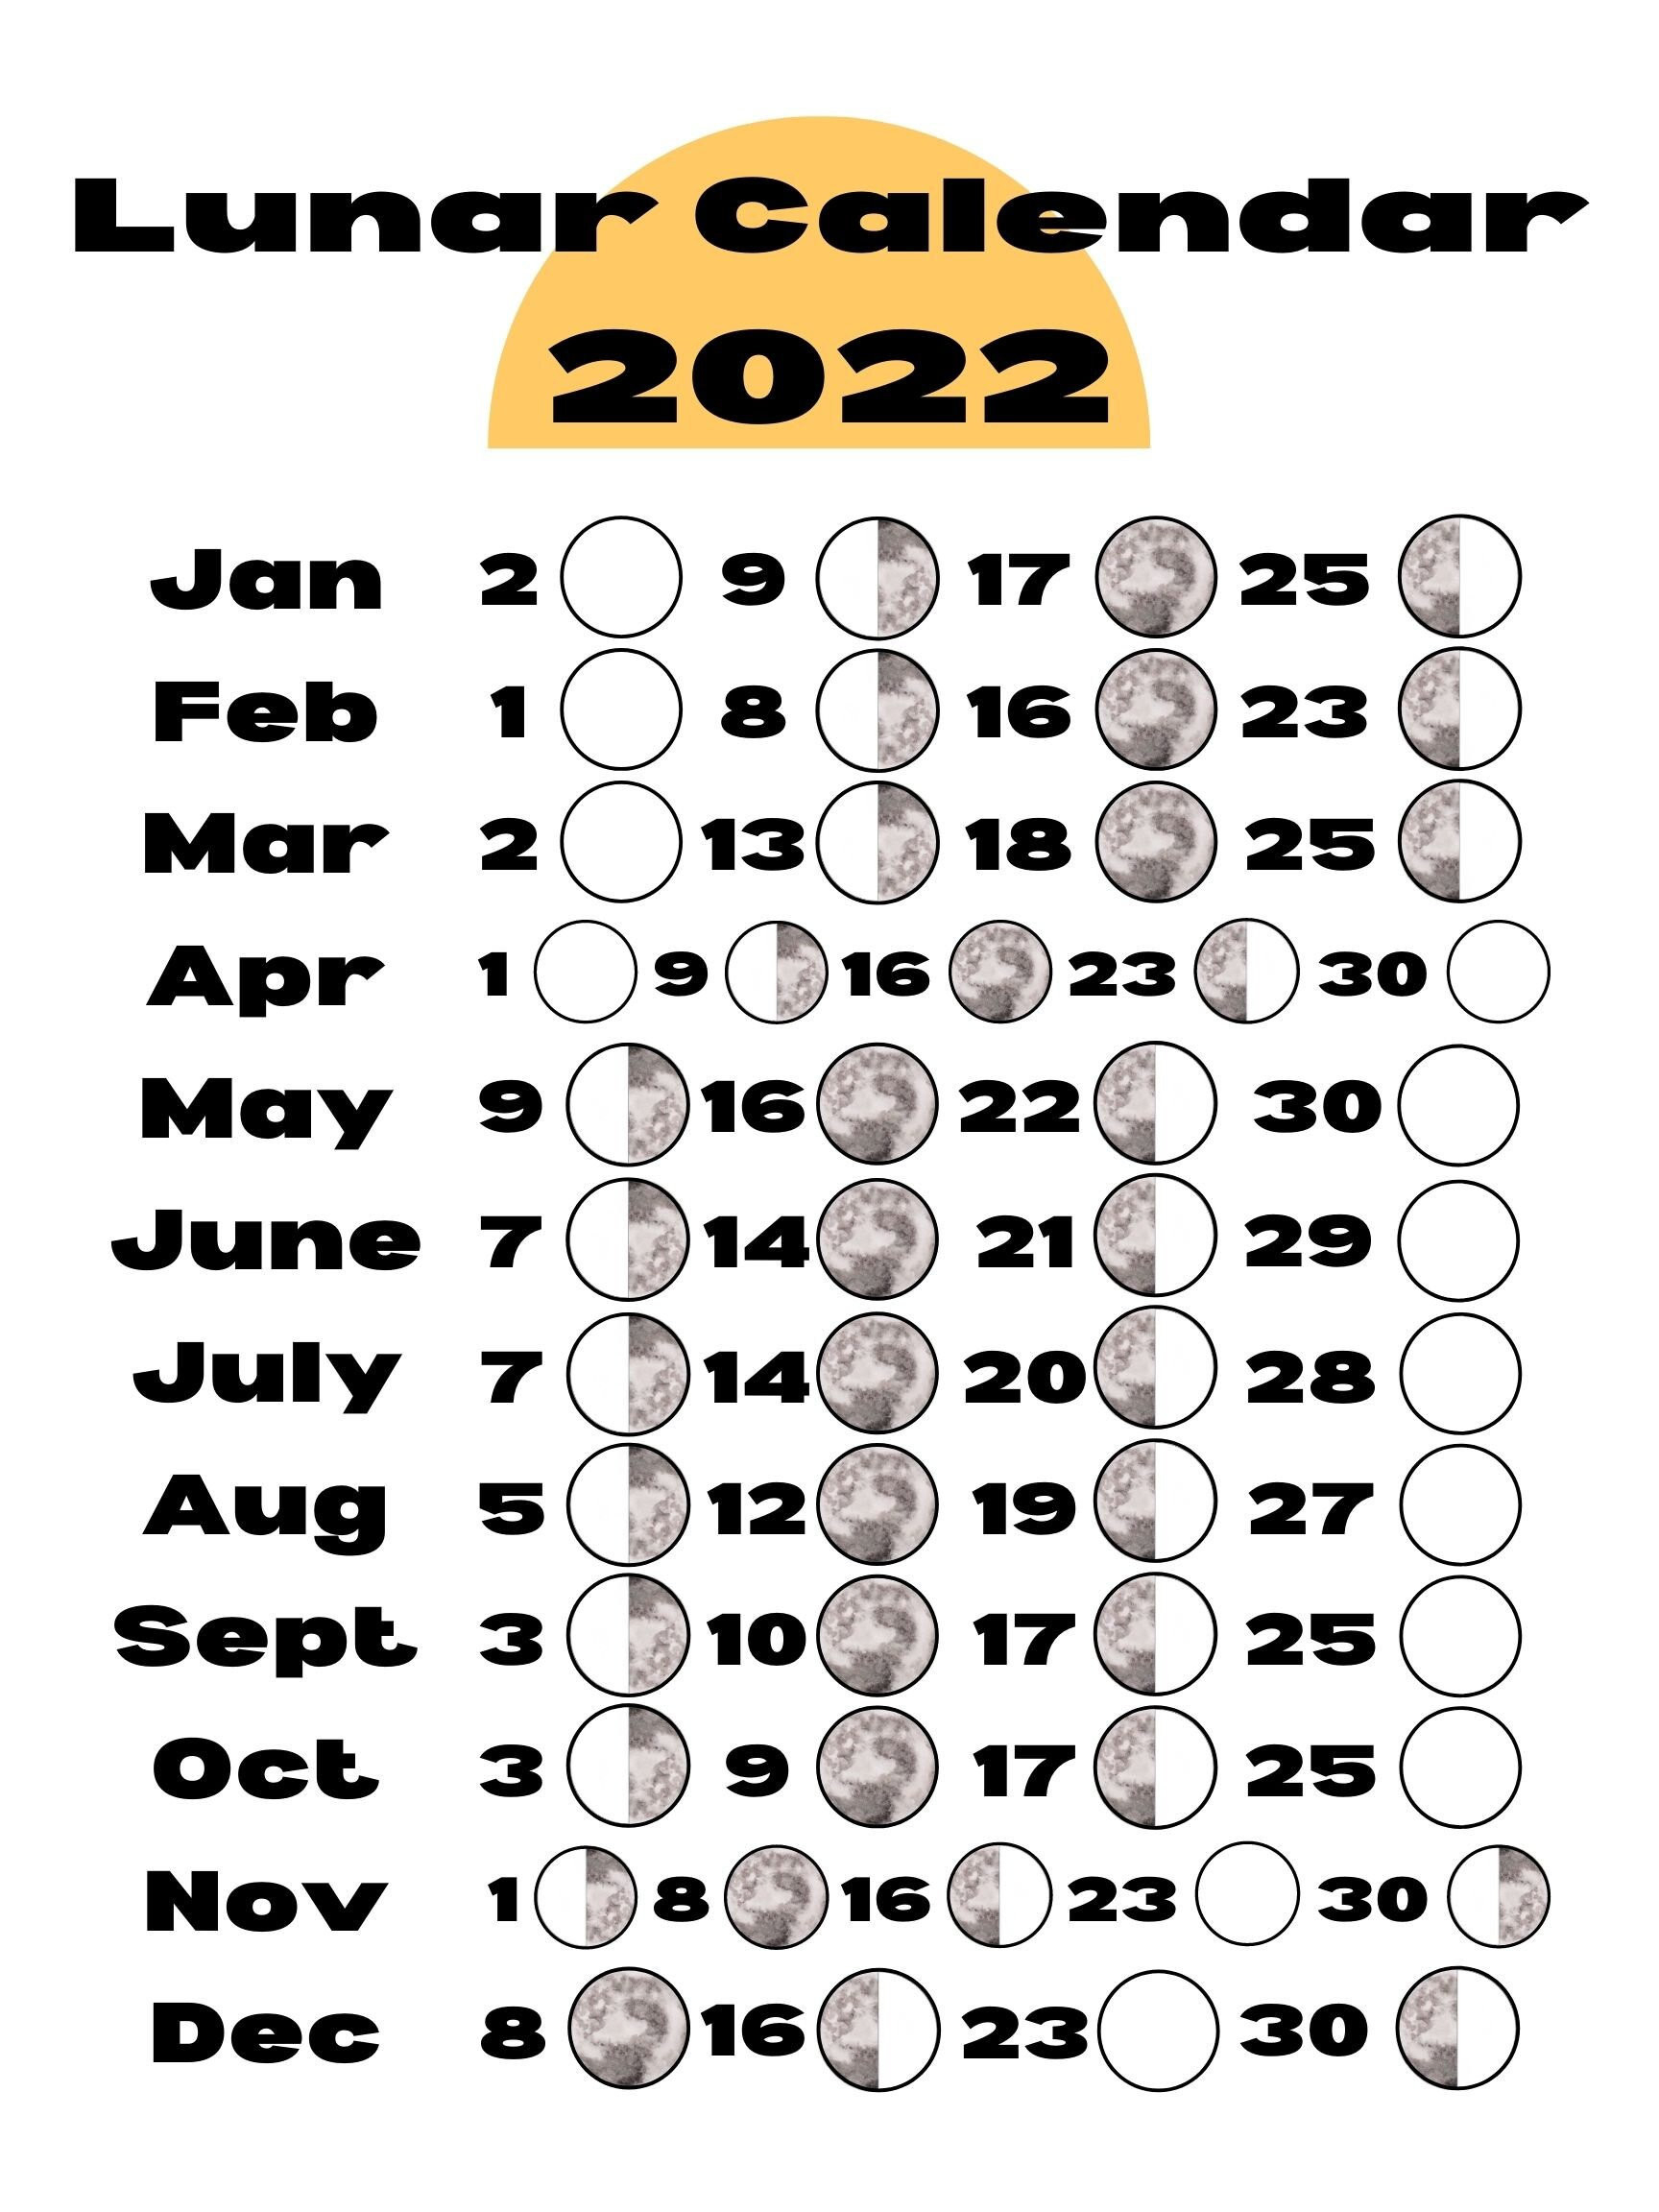 Lunar Calendar 2022 Instant Download | Etsy  Full Moon Calendar 2022 Moongiant